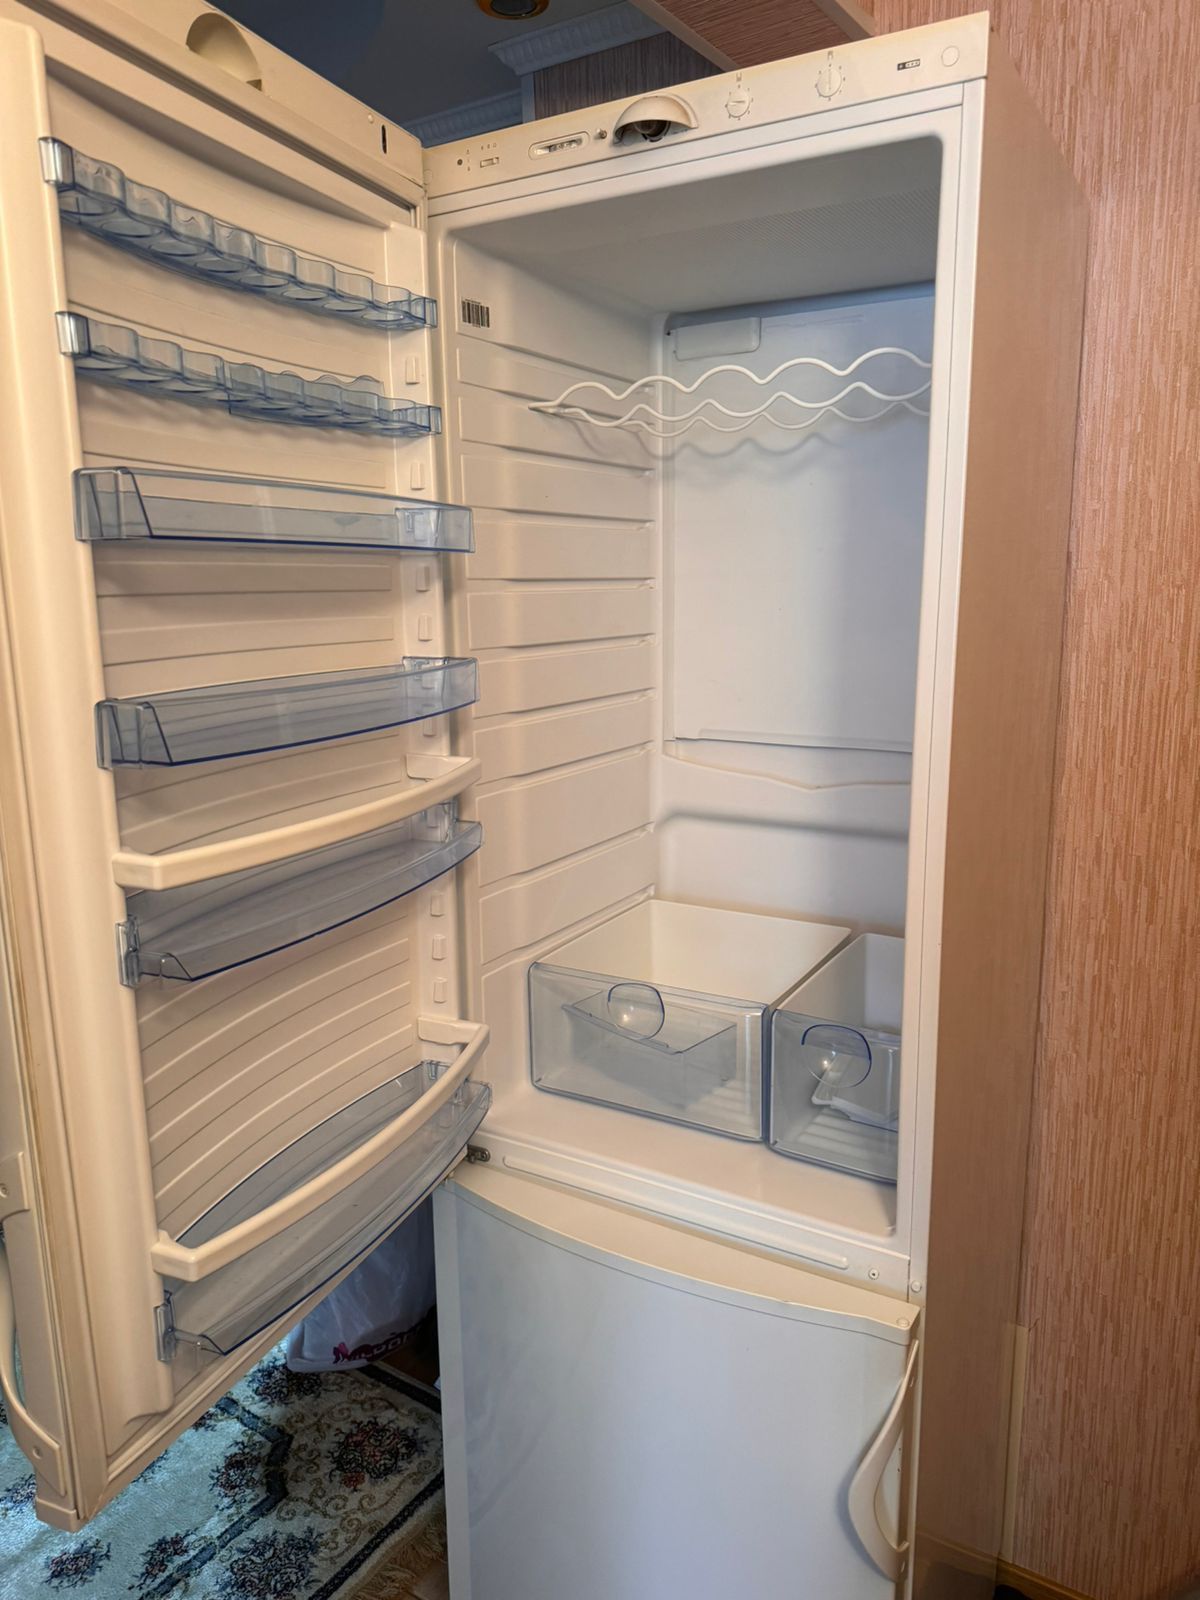 Продам холодильник "Vestfrost"